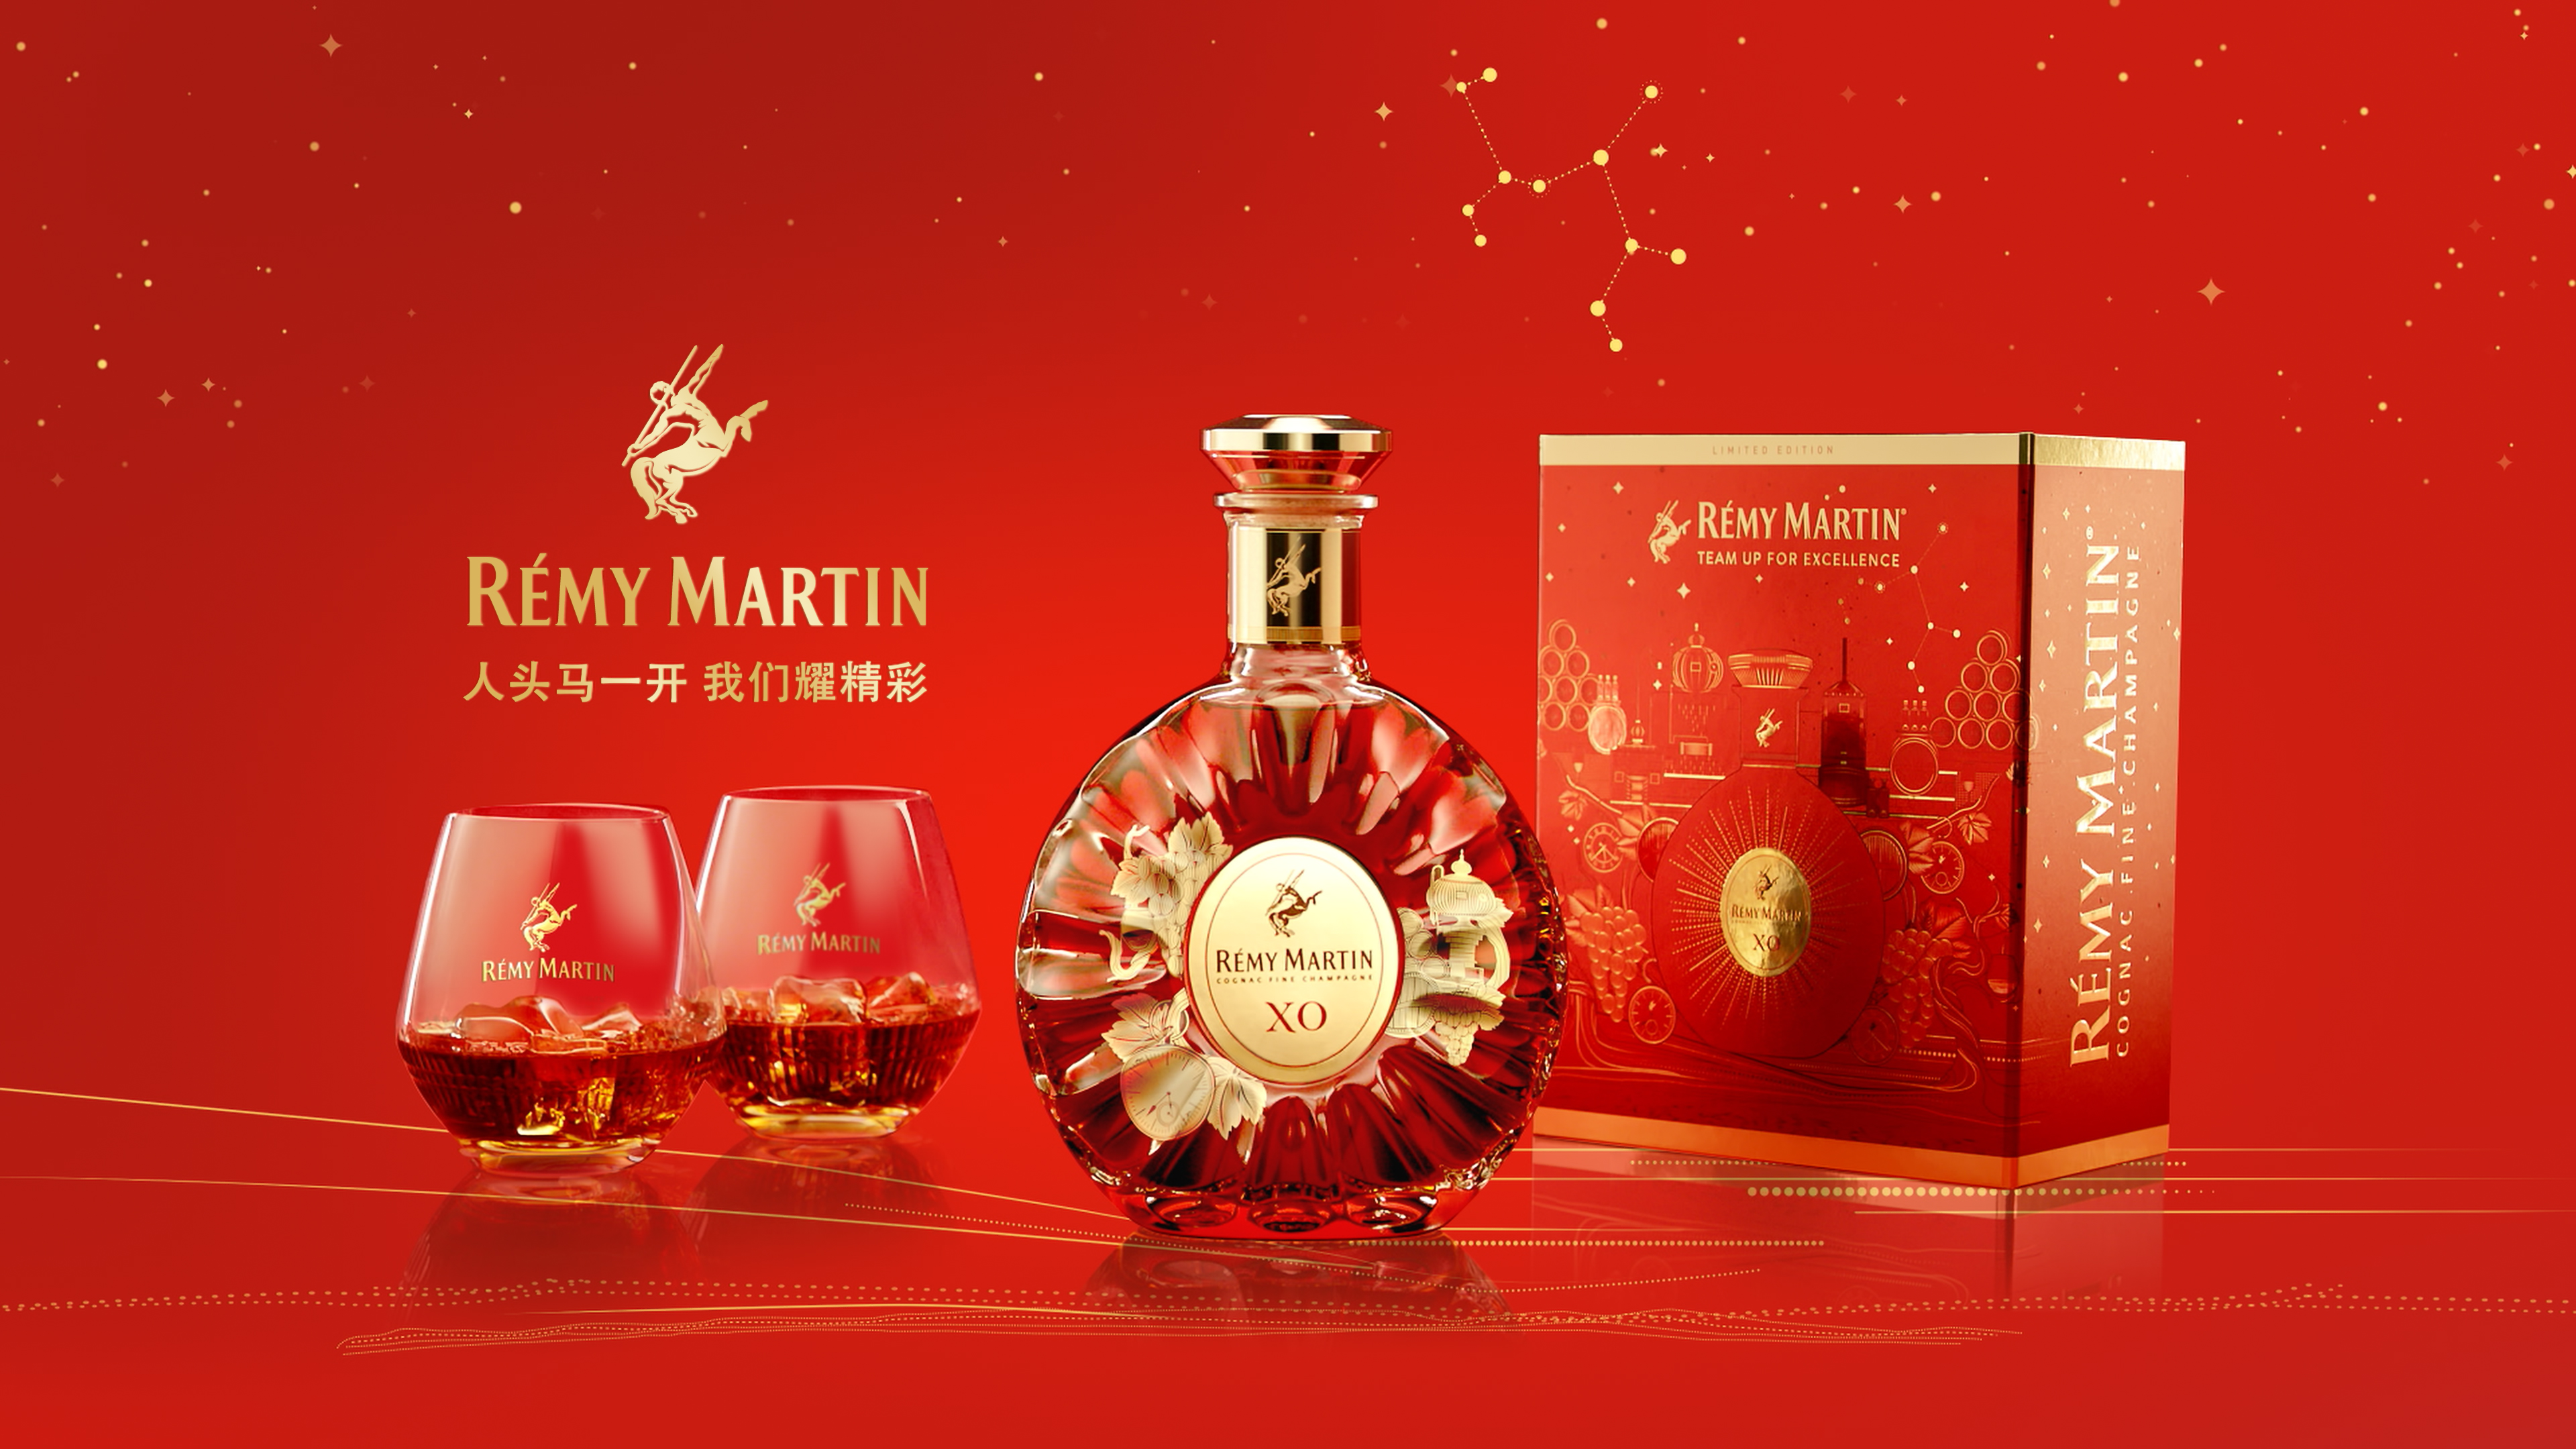 Armani Perfume's Ambassador is the WANG of CHINA